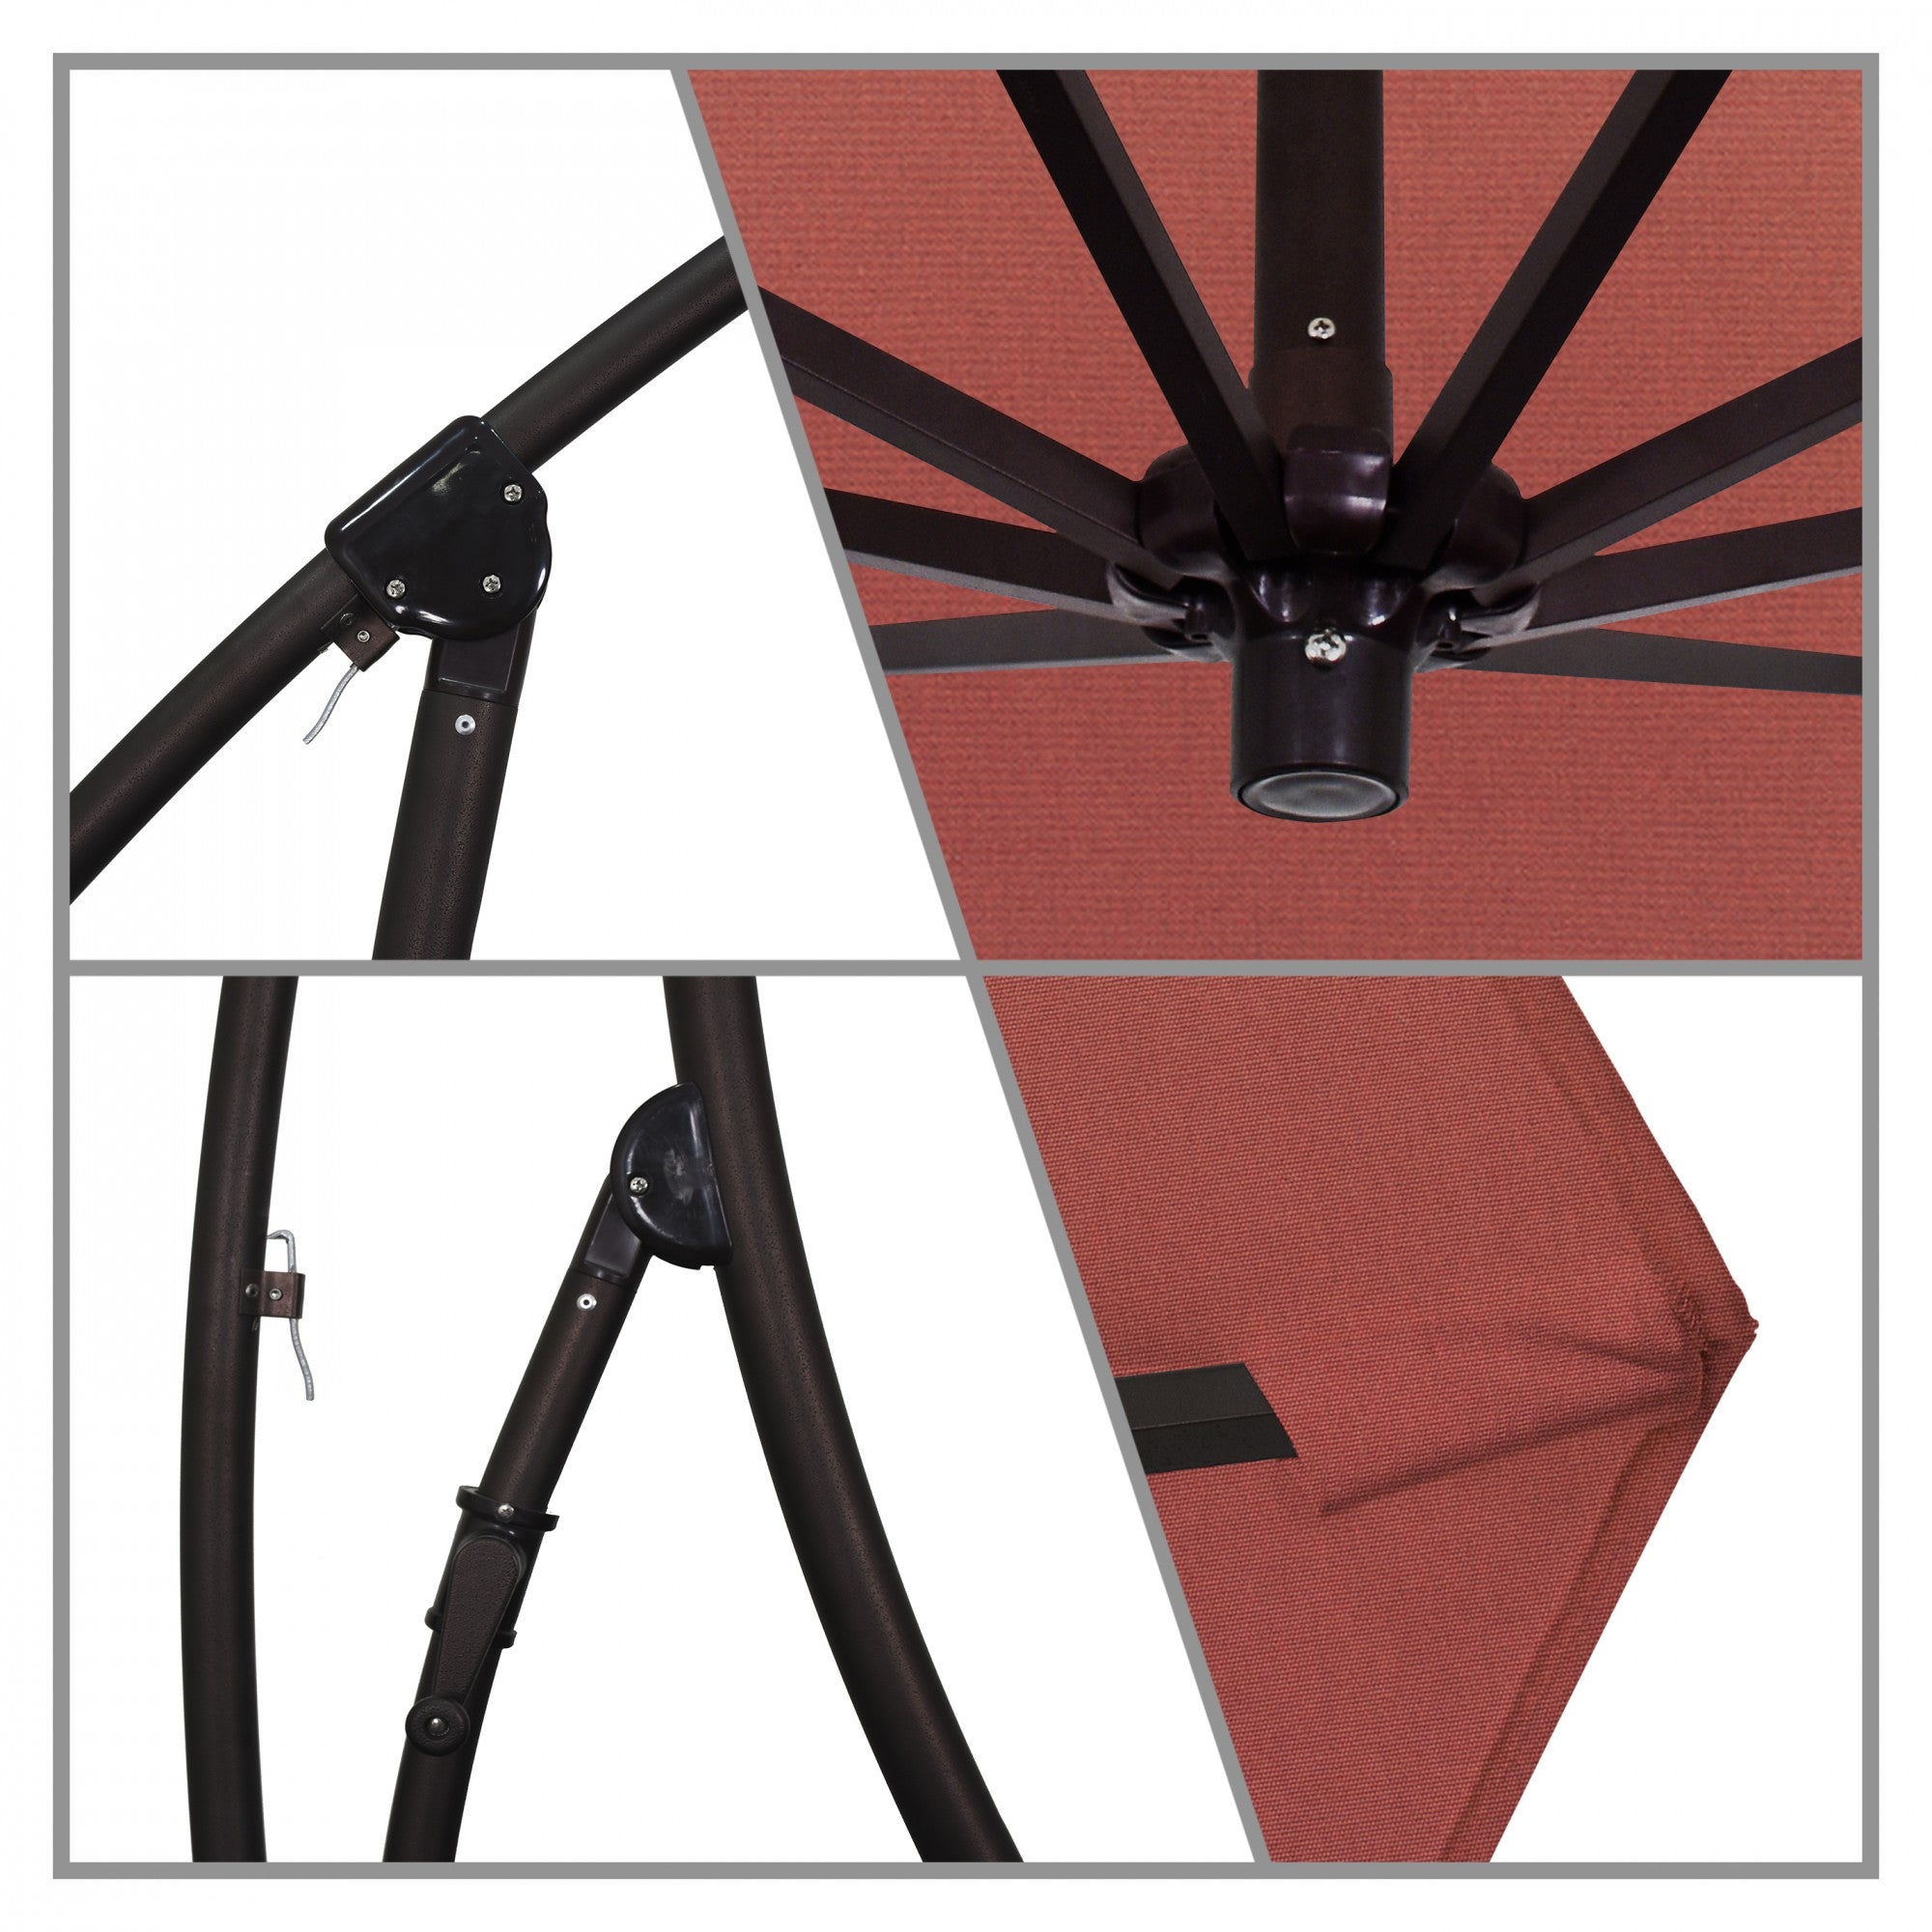 California Umbrella - 9' - Cantilever Umbrella - Aluminum Pole - Henna - Sunbrella  - BA908117-5407